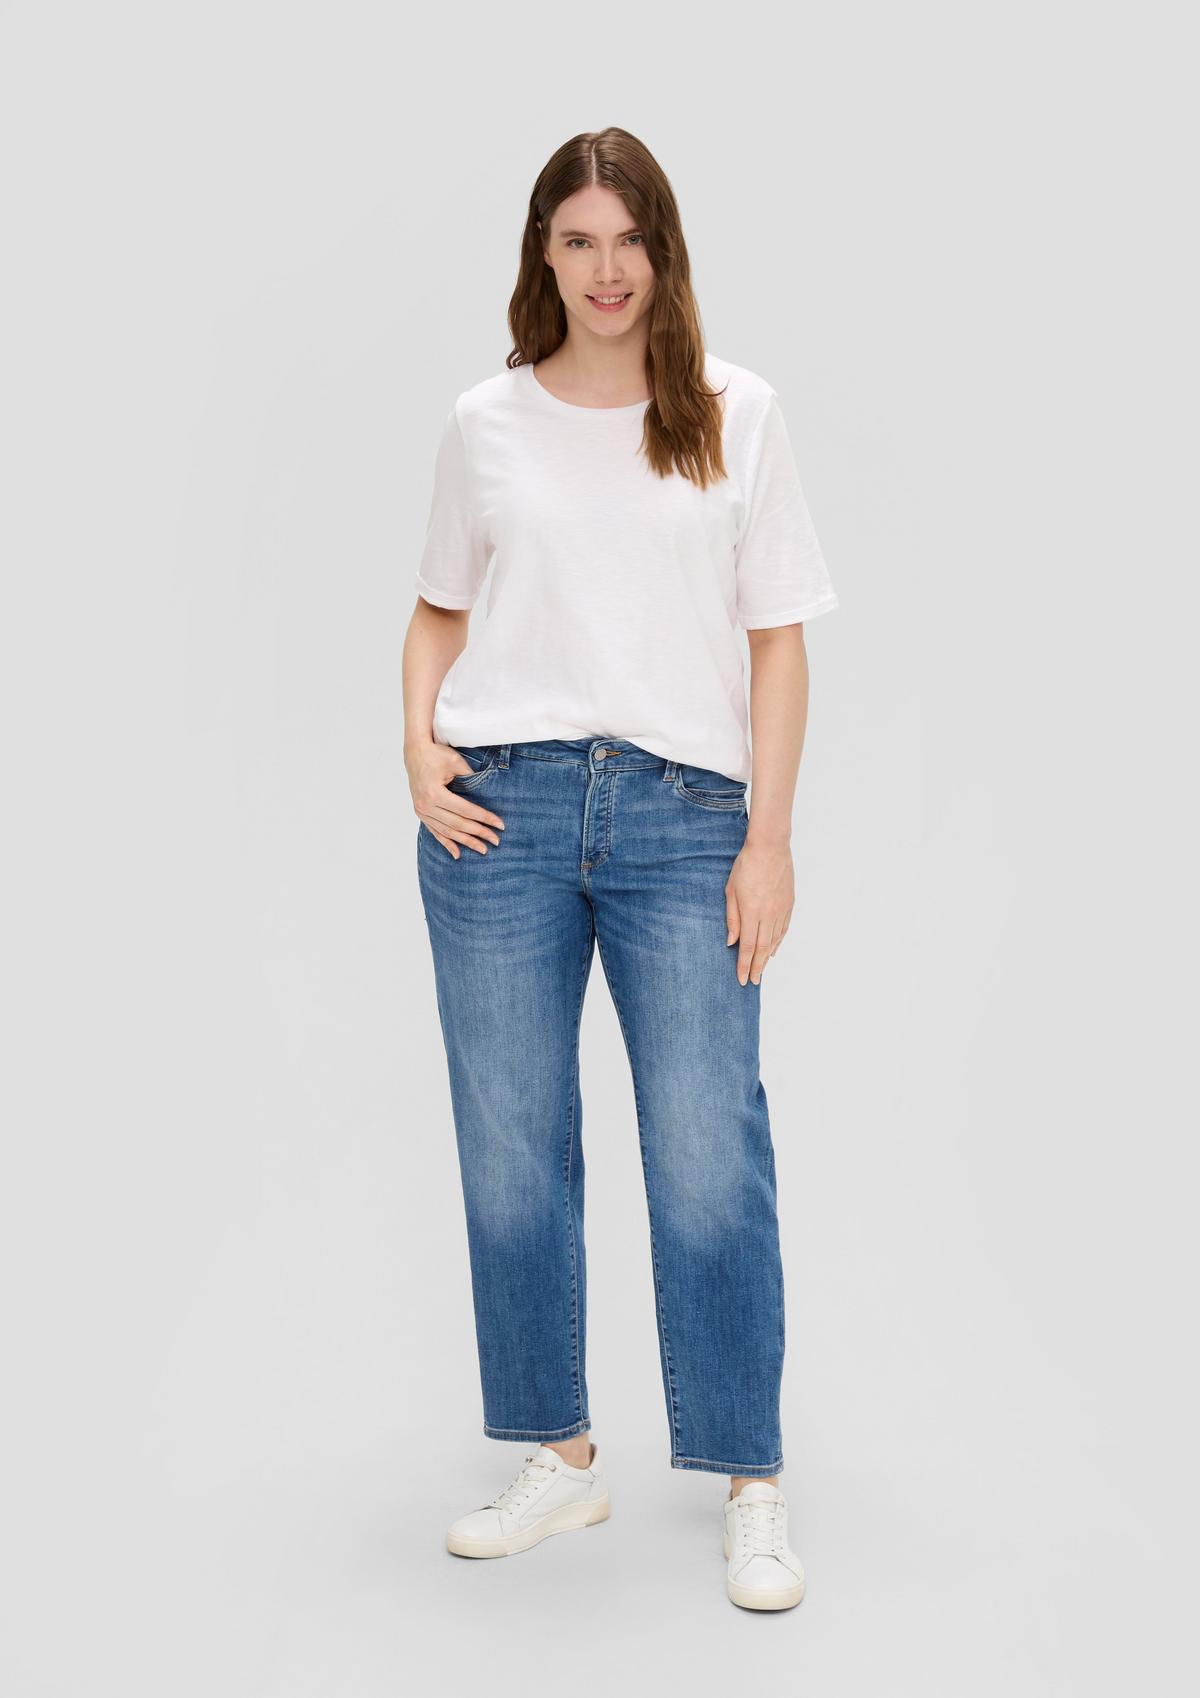 Jeans hlače/kroj Curvy Fit/Mid Rise/Semi široke hlačnice